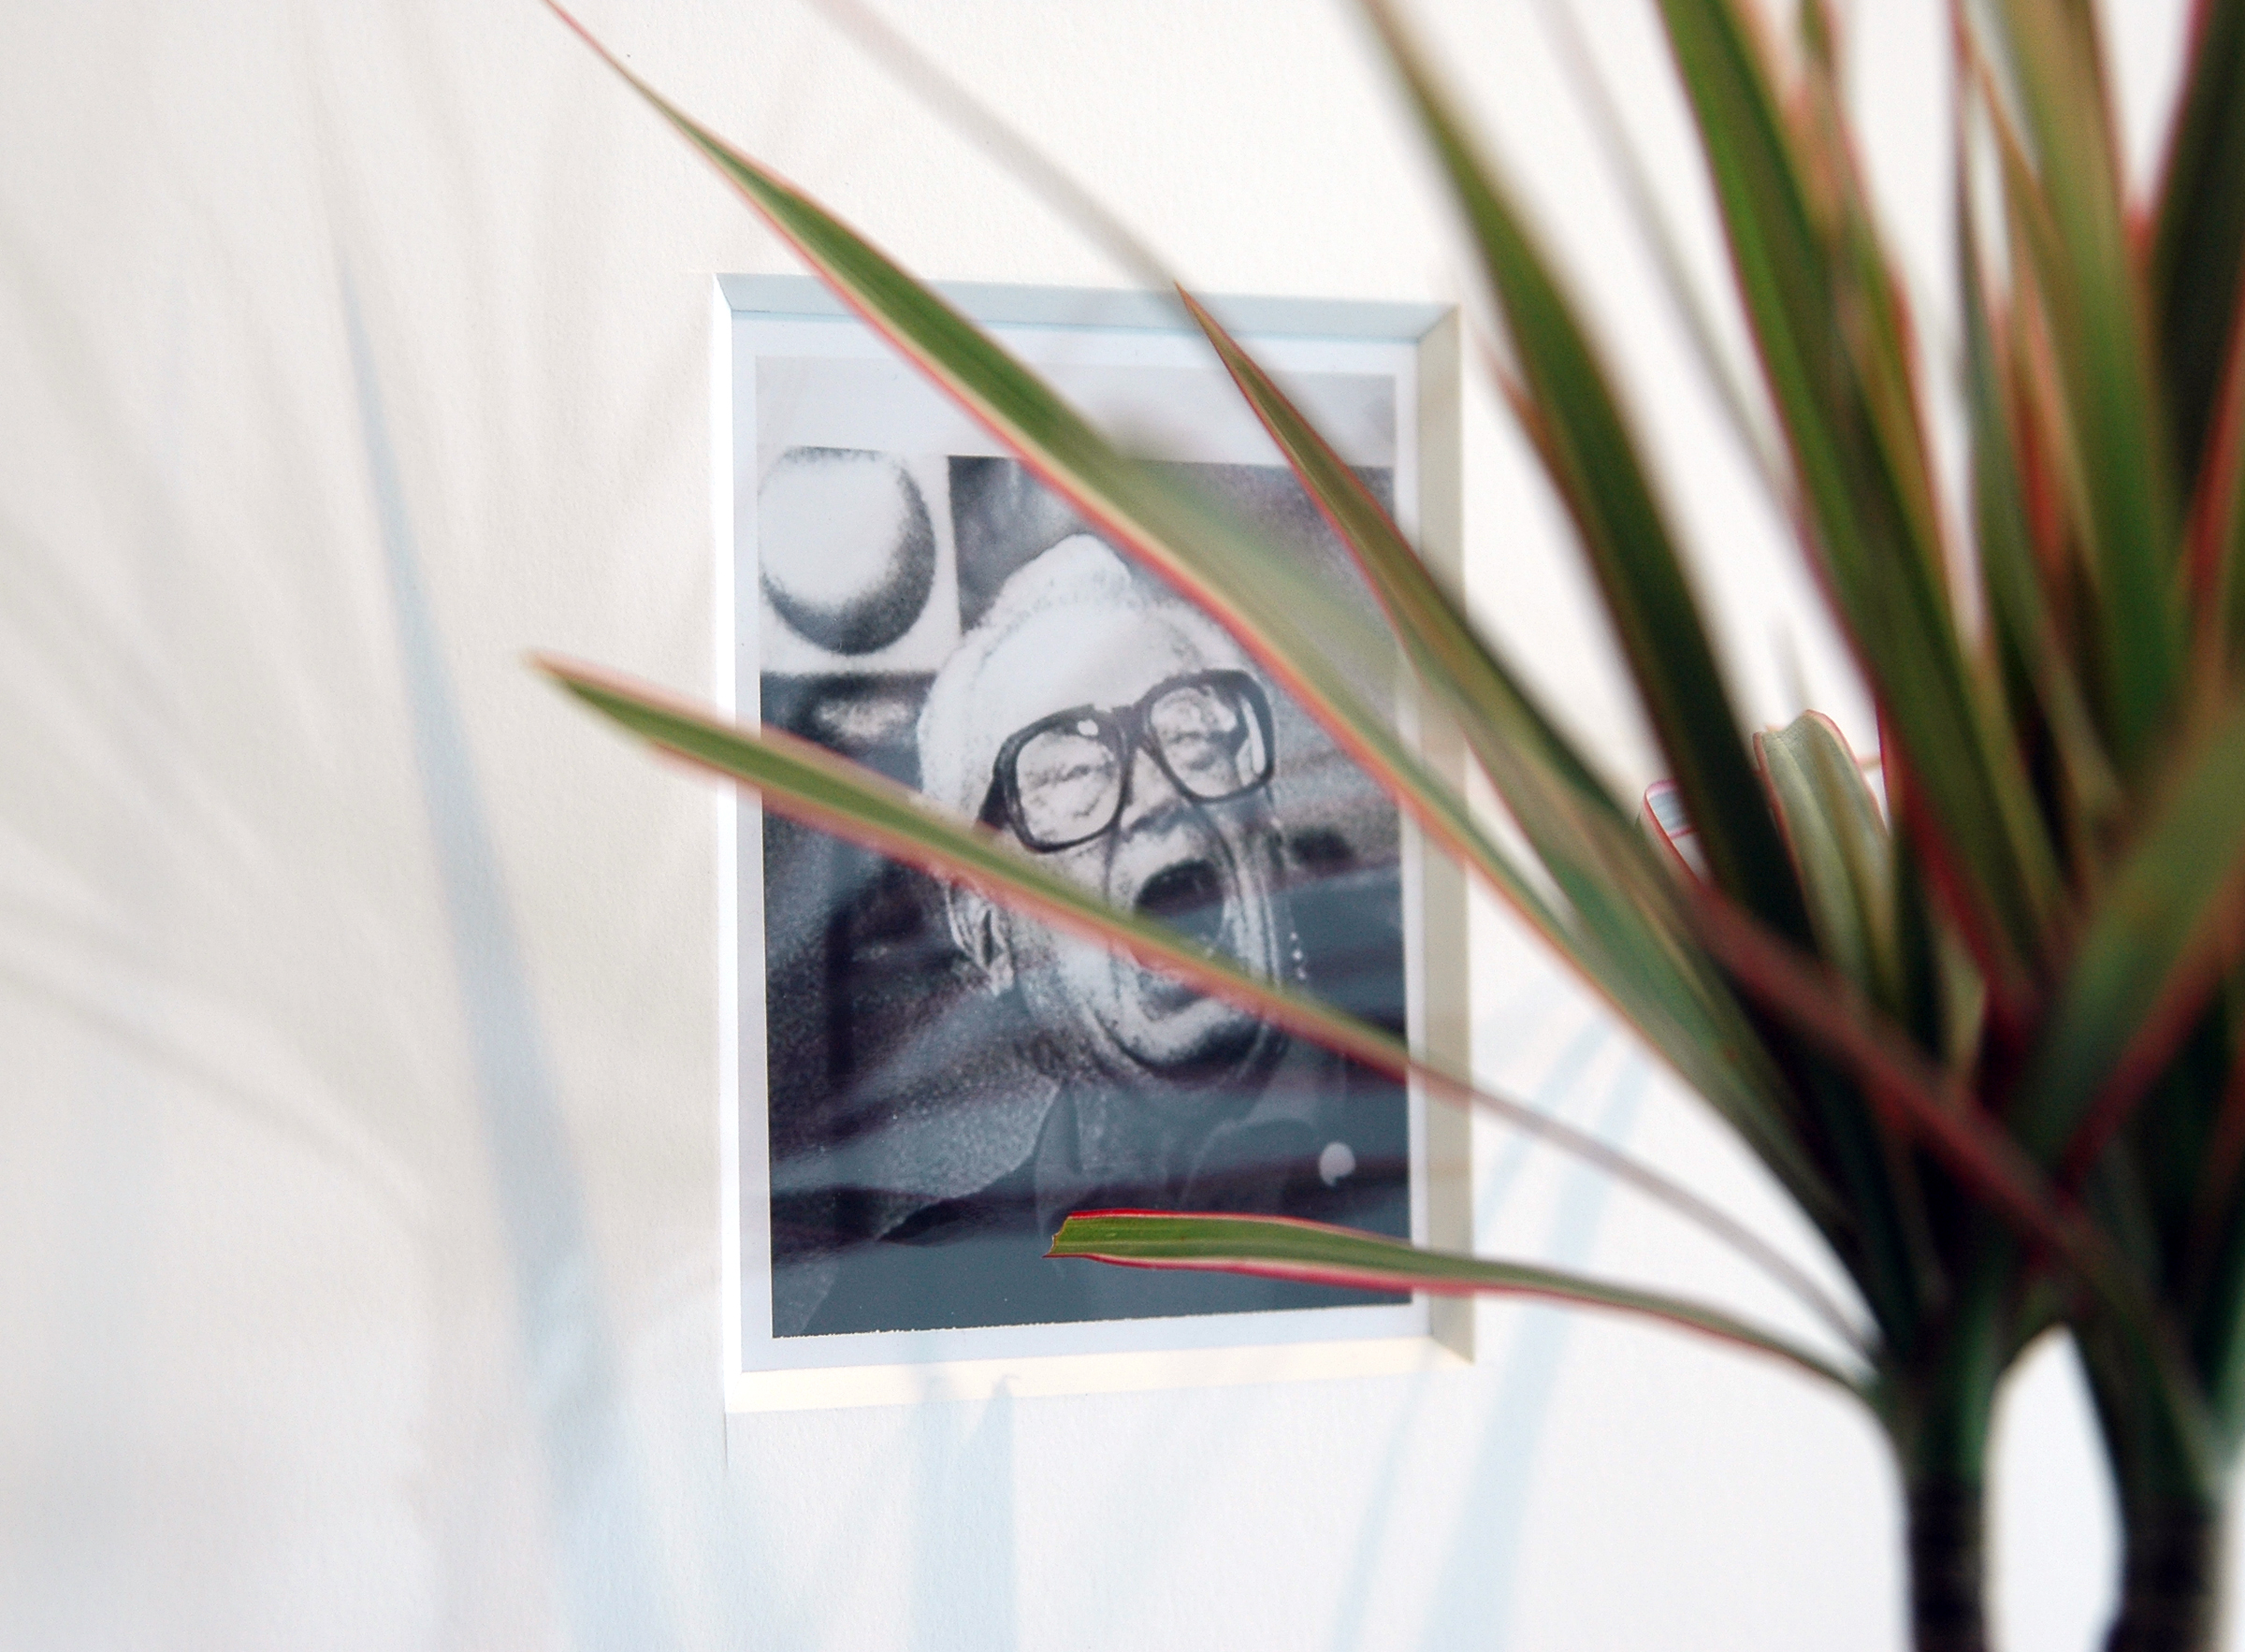   JOSHUA PIEPER   Dead and Alive (Harry) , framed archival Polaroid, shelf, tri-colored dresena plant, 24.5" x 16.25" x 9.75", 2012 